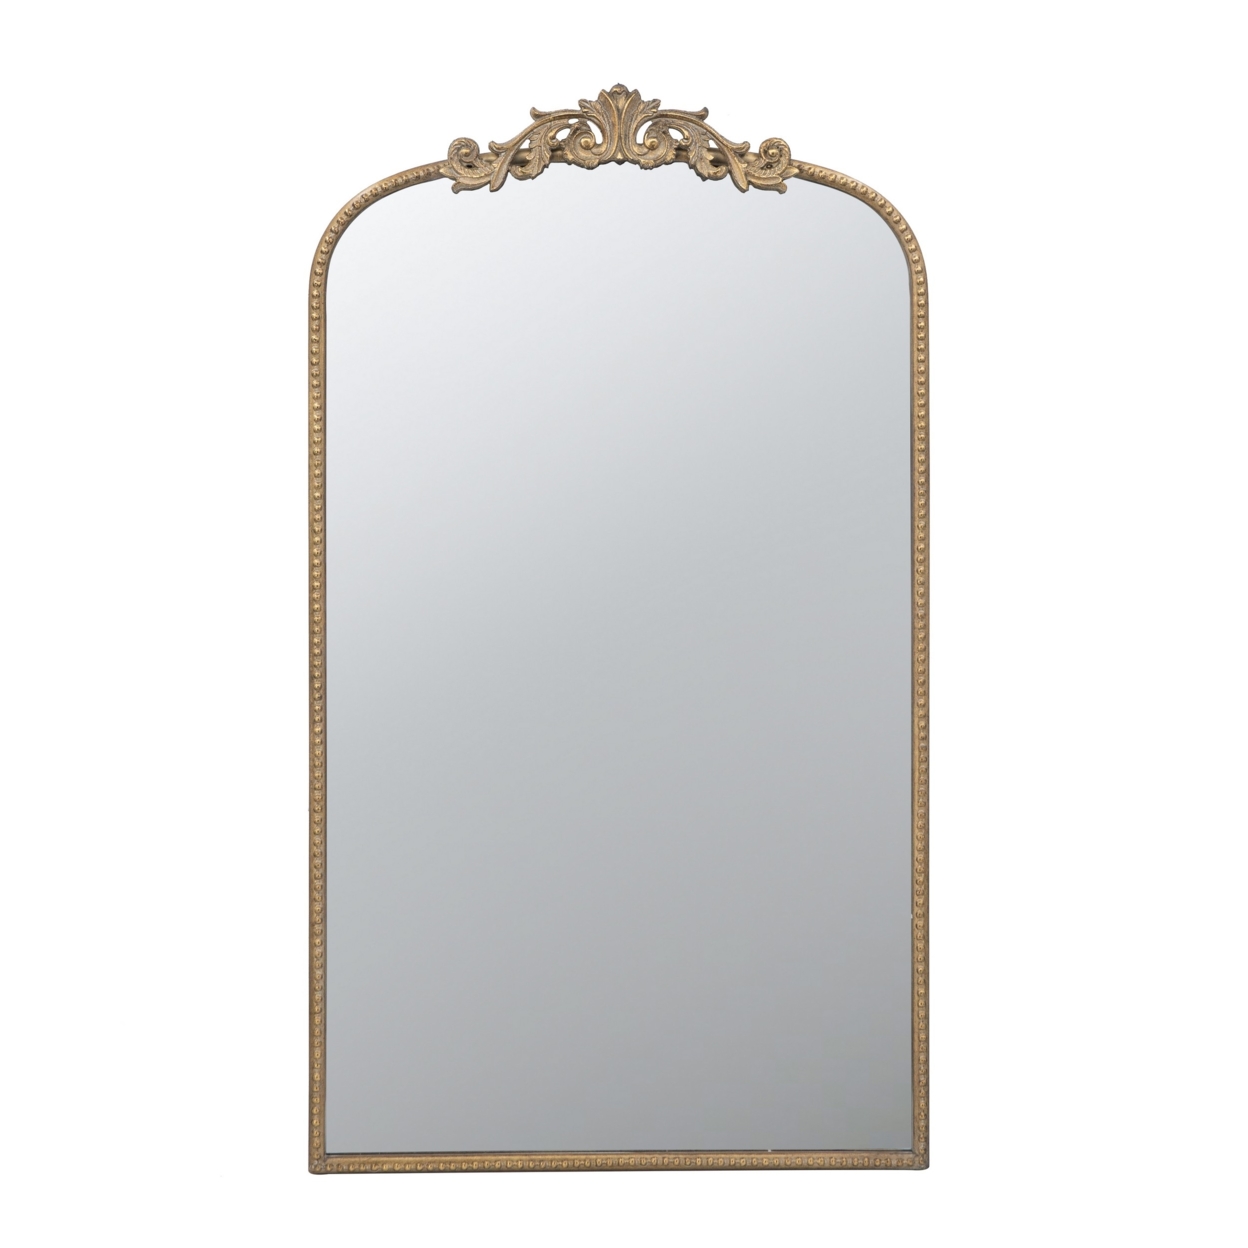 Kea 42 Inch Large Wall Mirror, Gold Curved Metal Frame, Baroque Design- Saltoro Sherpi